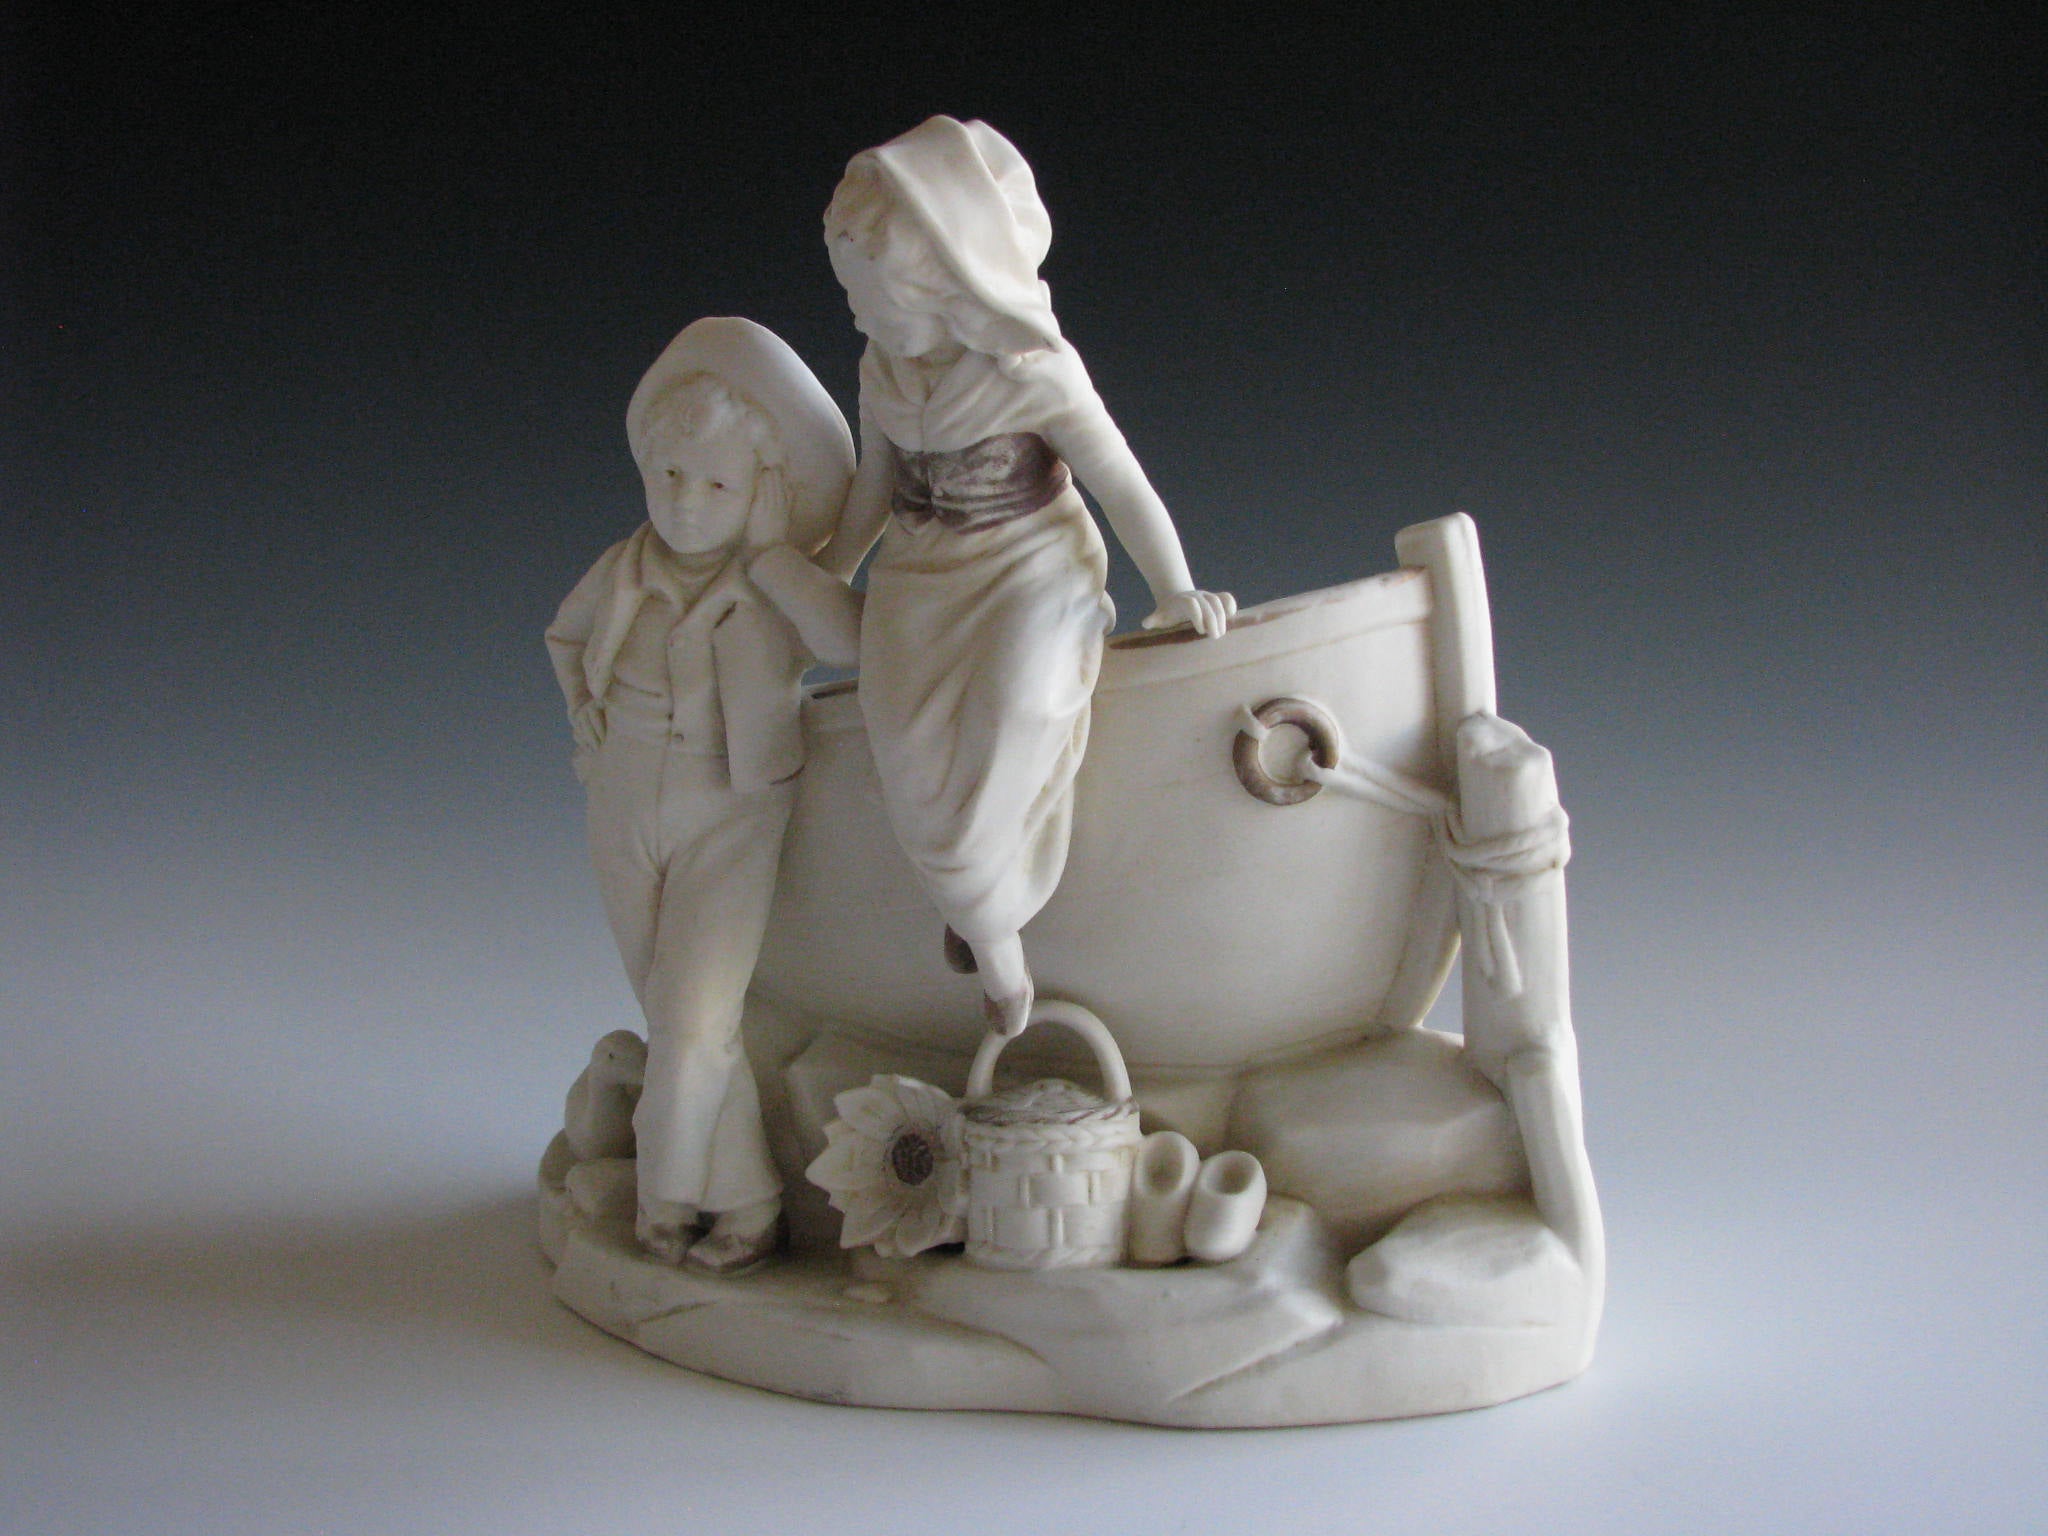 edgebrookhouse - Antique 19th Century German White Porcelain Bisque Figurine